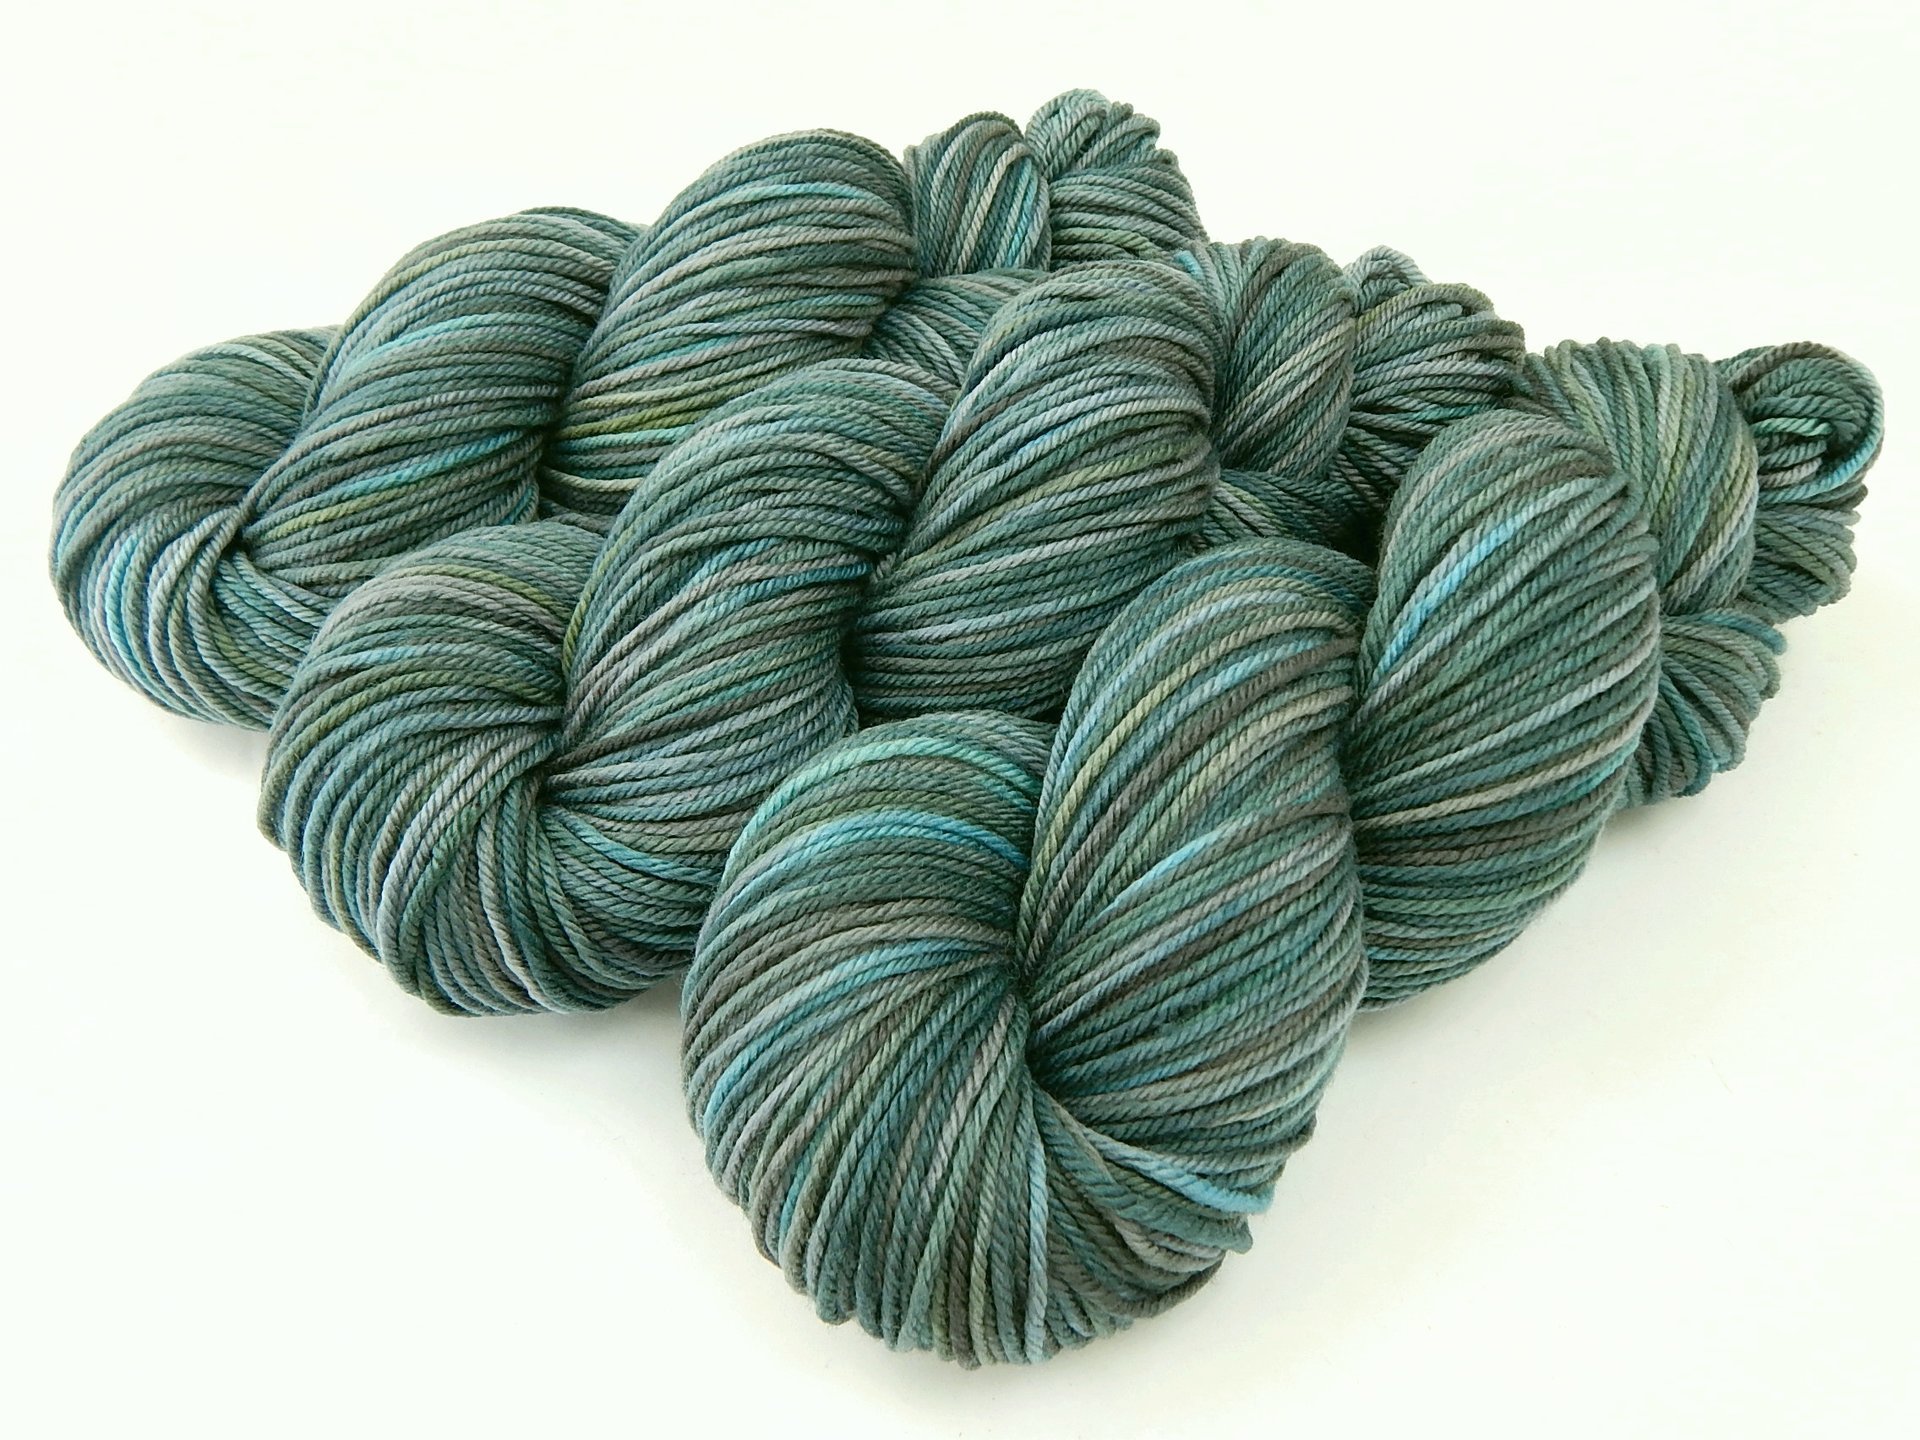 Hand Dyed Yarn, DK Weight Superwash Merino Wool - Storm Clouds - Indie Dyer Knitting Yarn, Slate Blue Grey Gray Wool Yarn